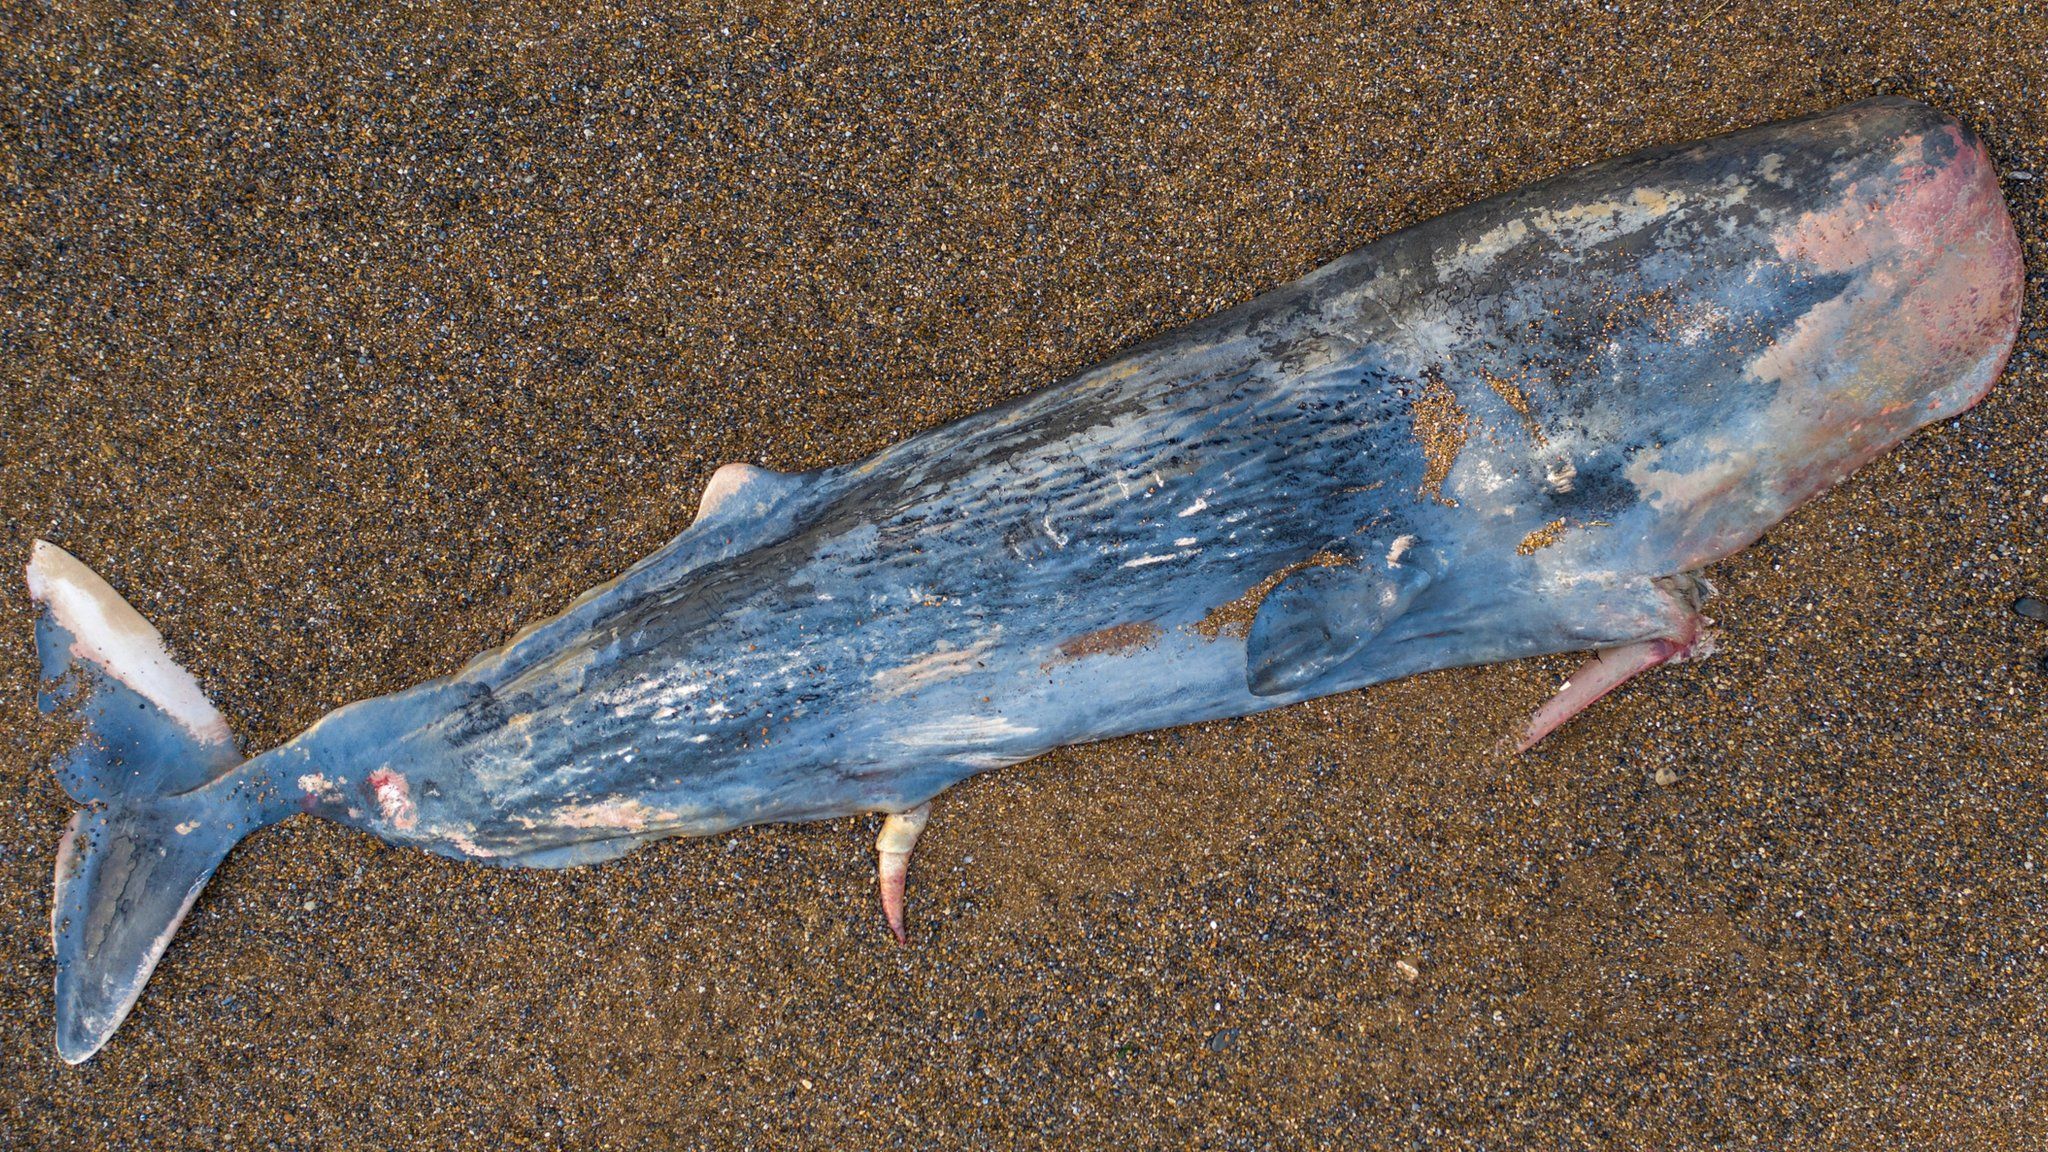 Sperm whale on beach at Weybourne